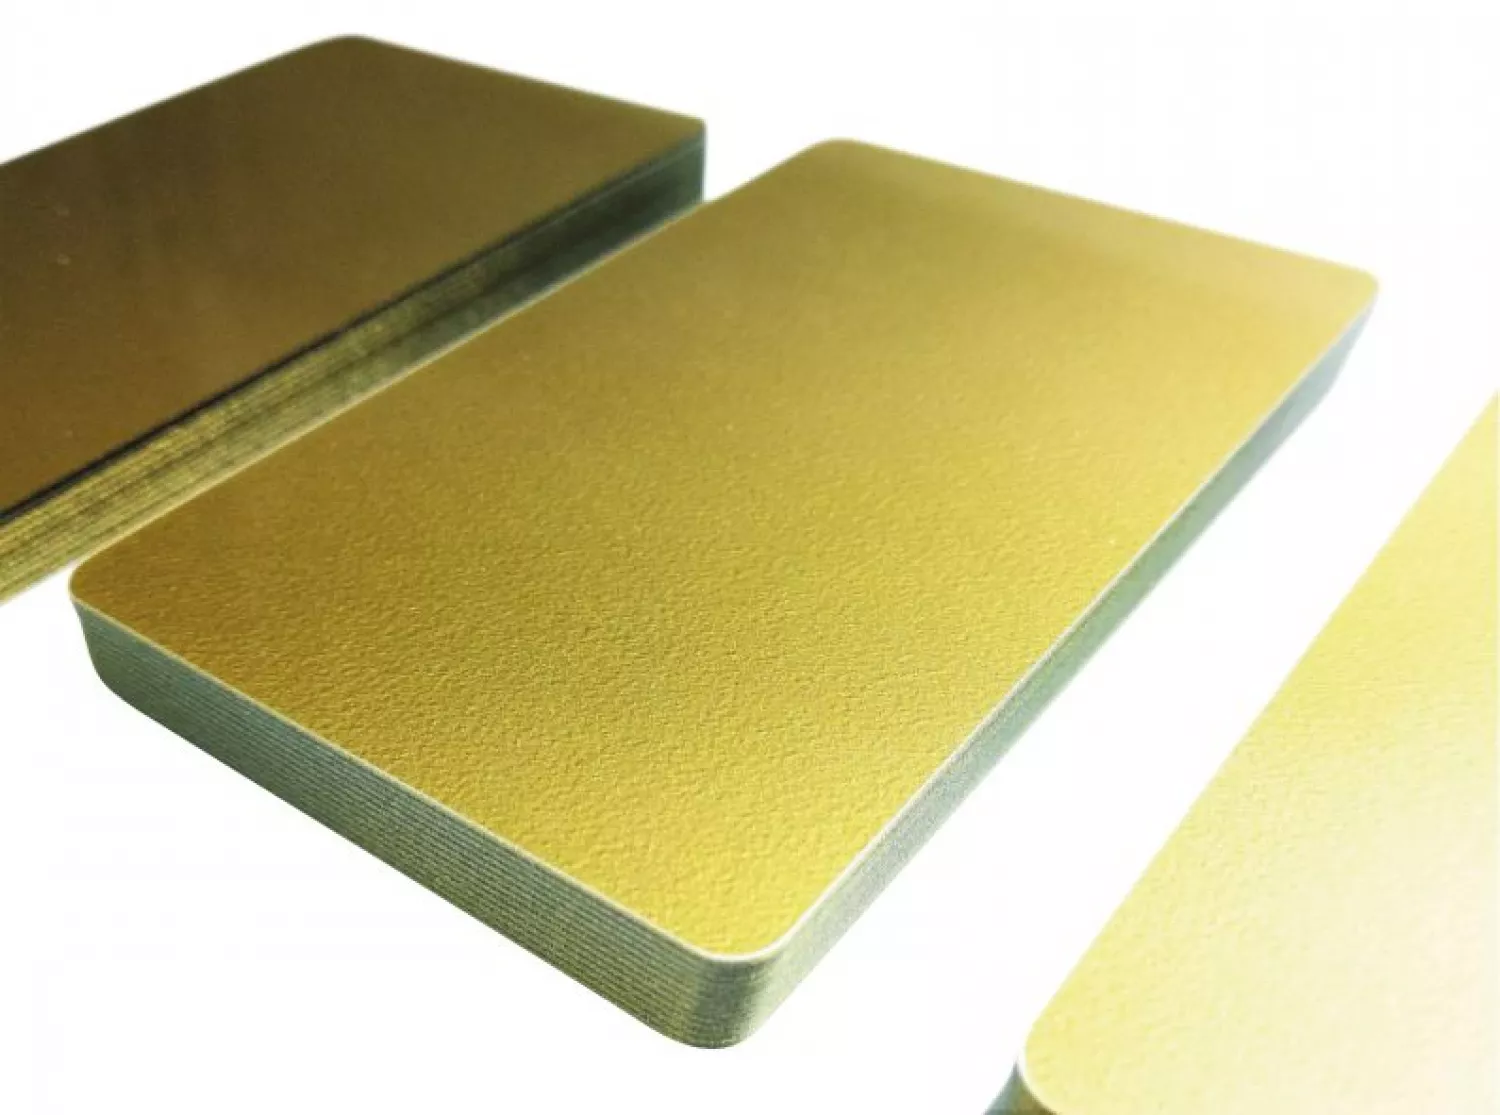 plastic card soft gold light